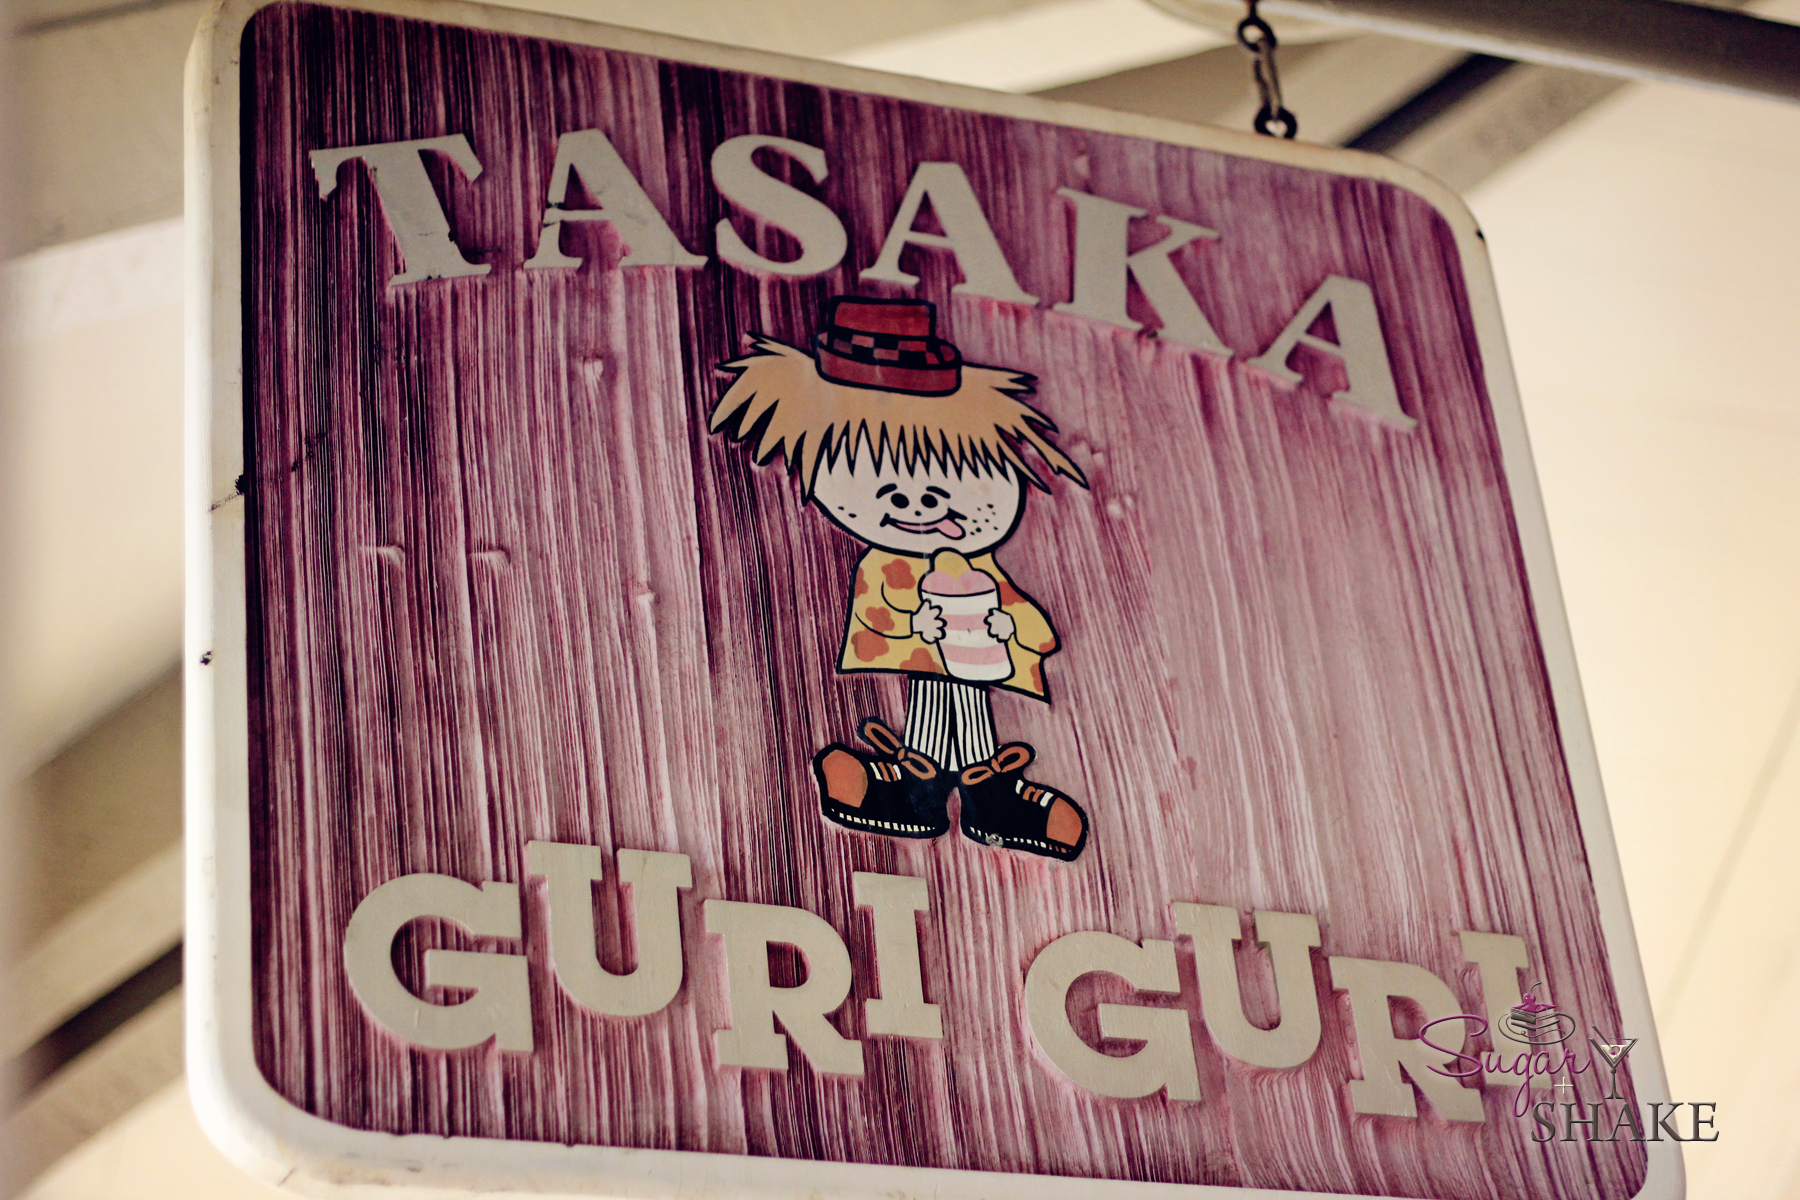 Tasaka Guri Guri in the Maui Mall. A local tradition for...um, forever! Go Maui, you gotta get guri guri! © 2012 Sugar + Shake